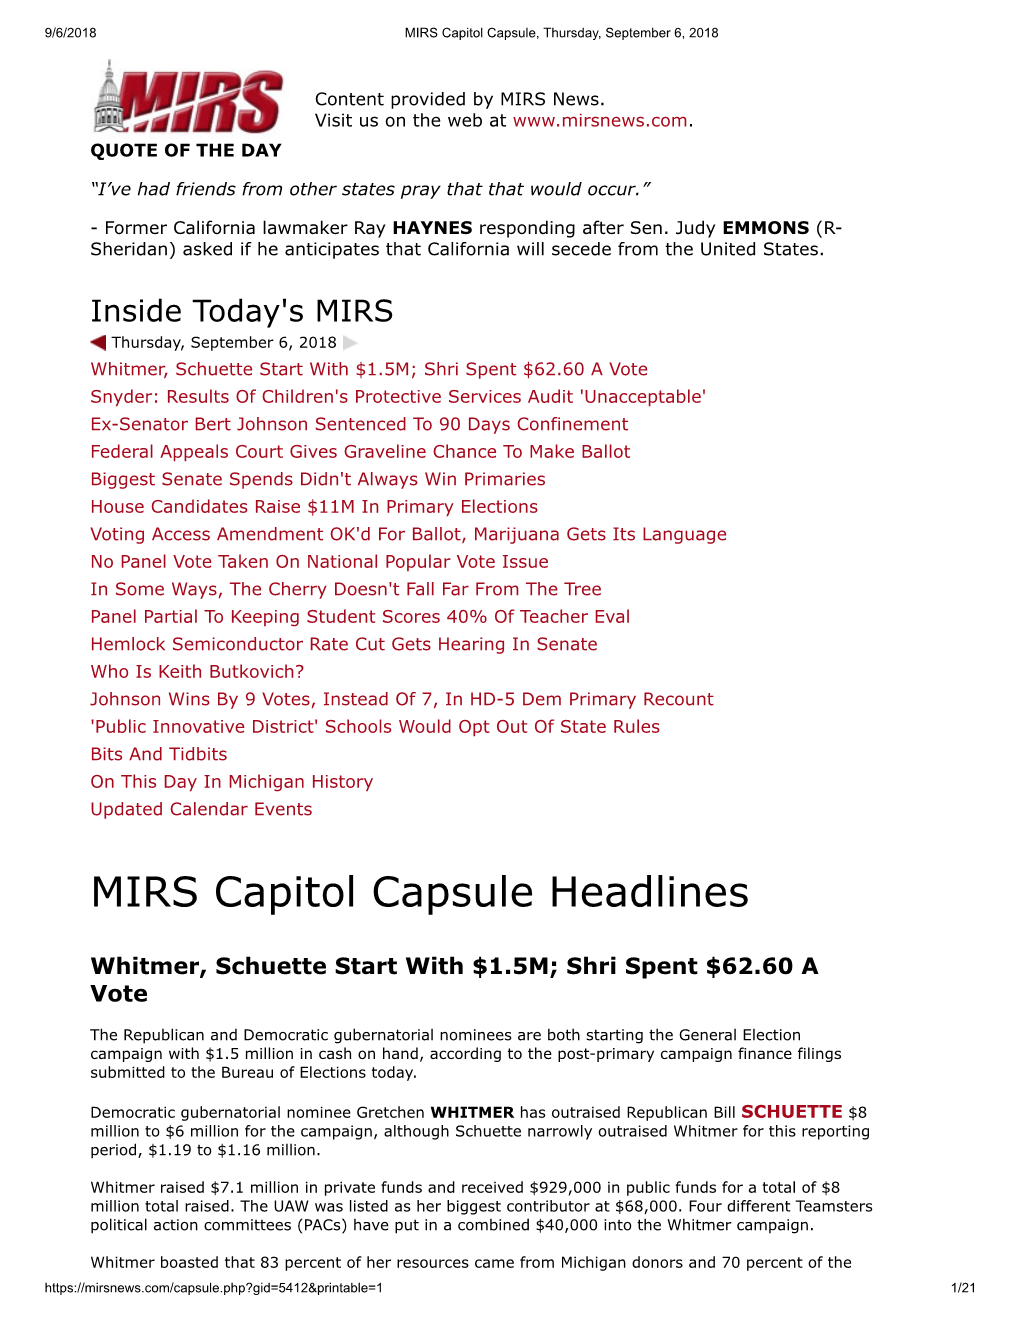 MIRS Capitol Capsule Headlines